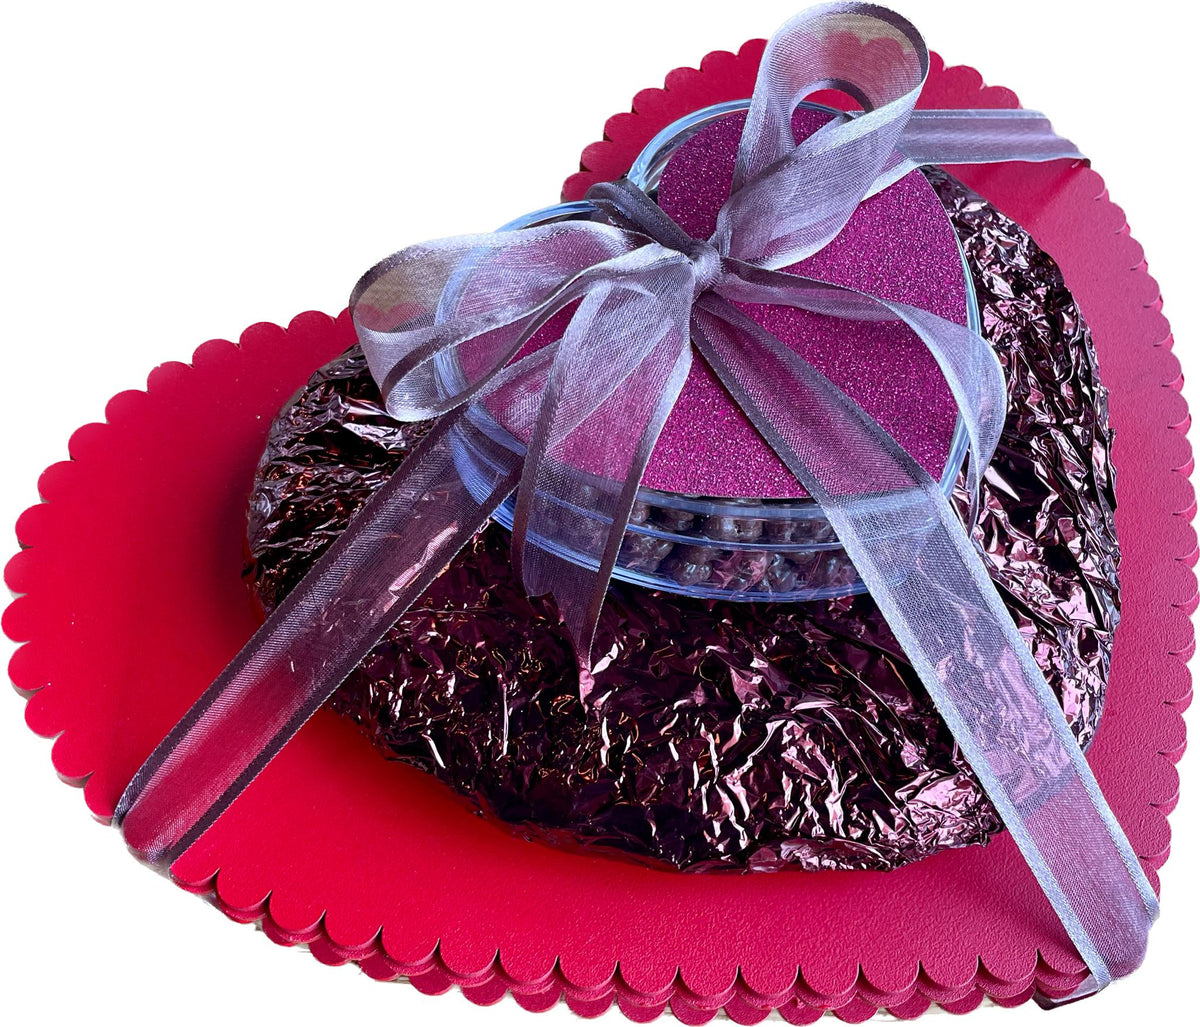 Sweetheart Gift Tower-Chocolate-Eclipse Chocolate